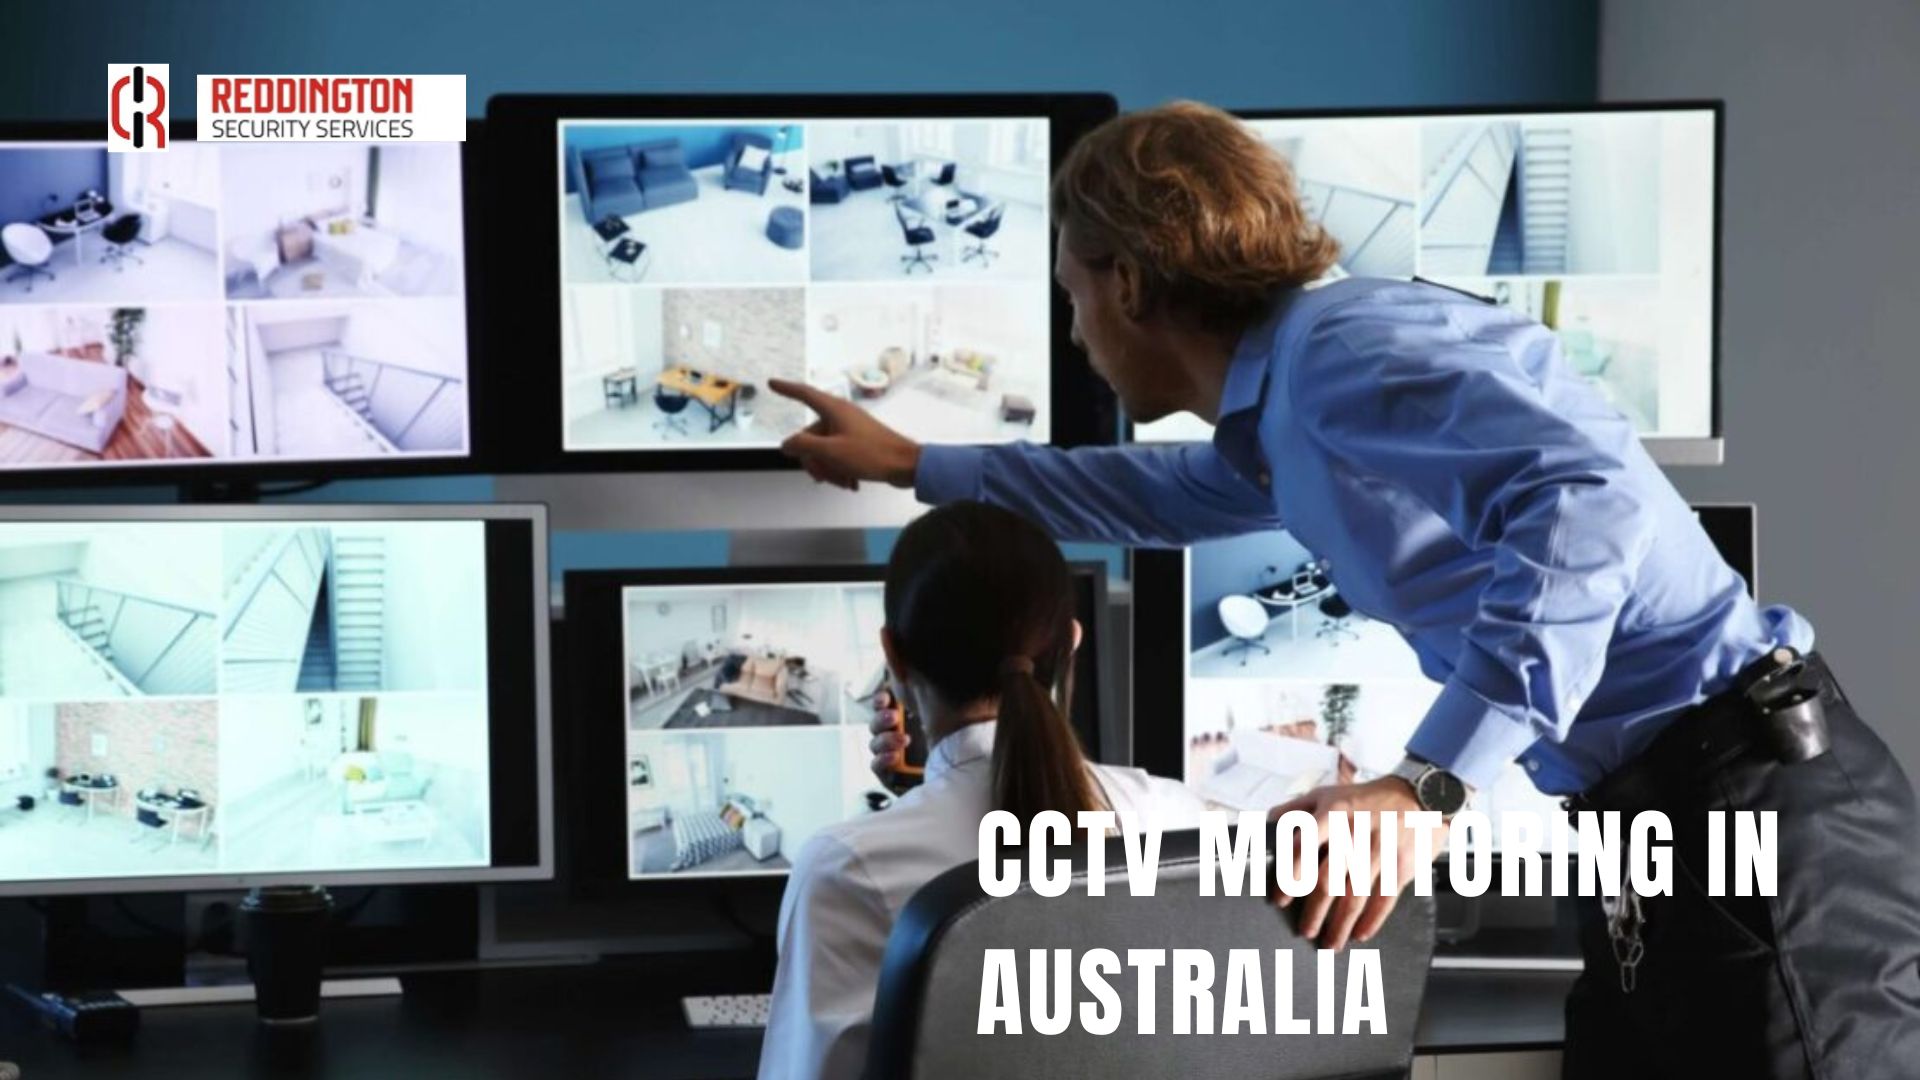 CCTV Monitorting in Australia